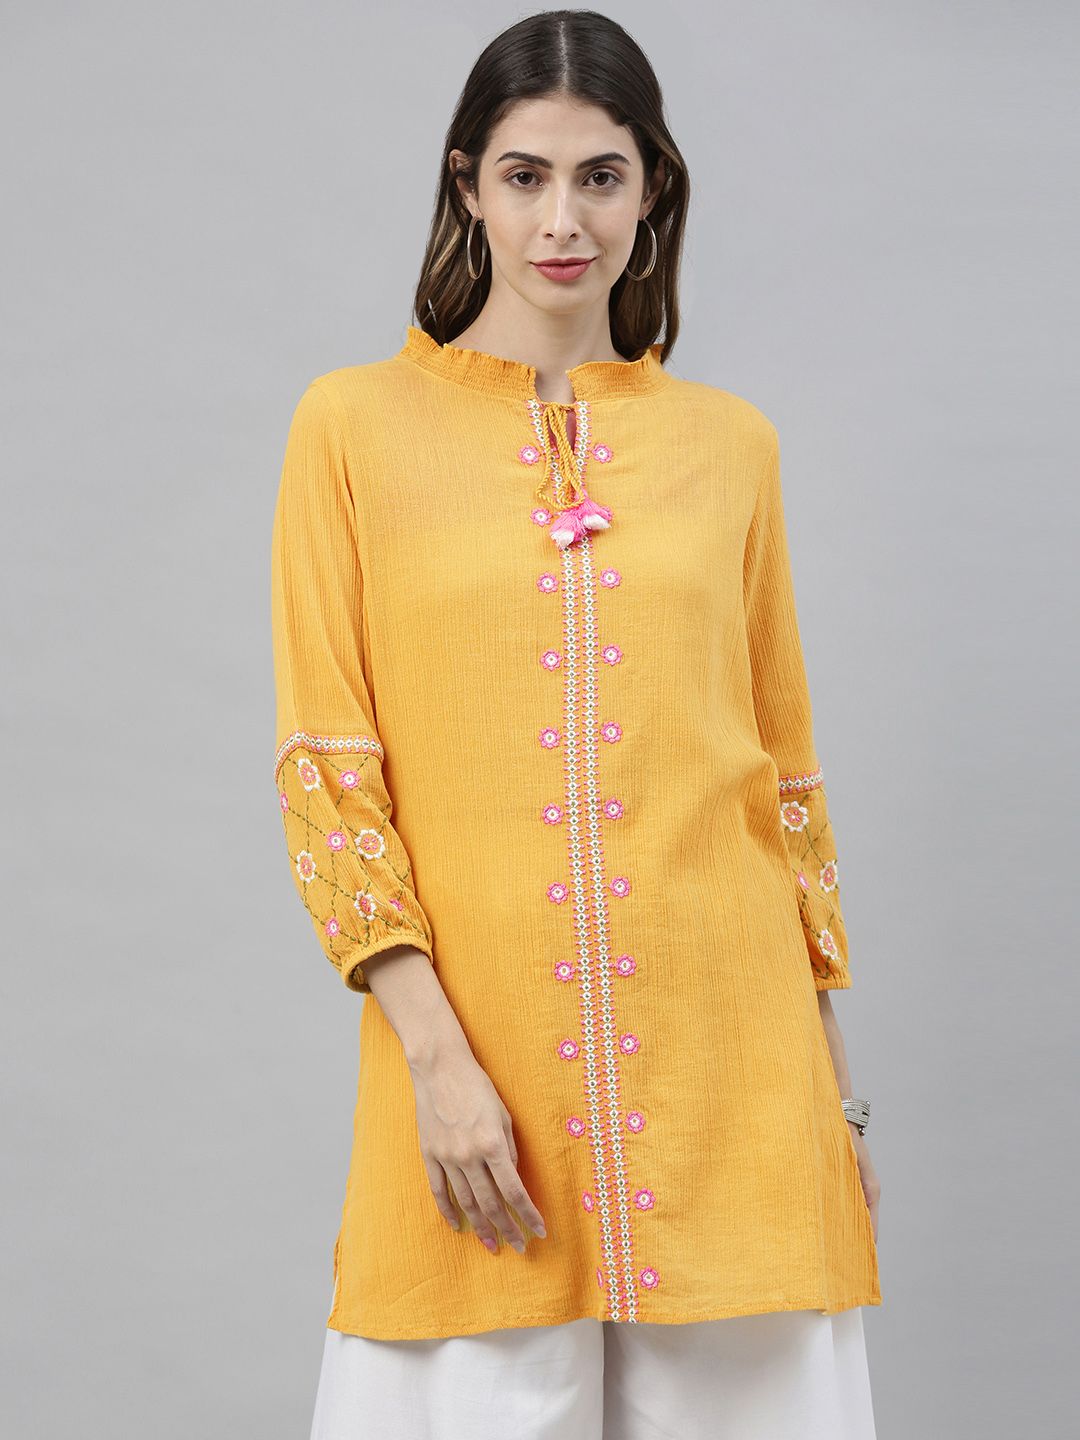 Global Desi Women's Mustard & White Solid Tunic Price in India